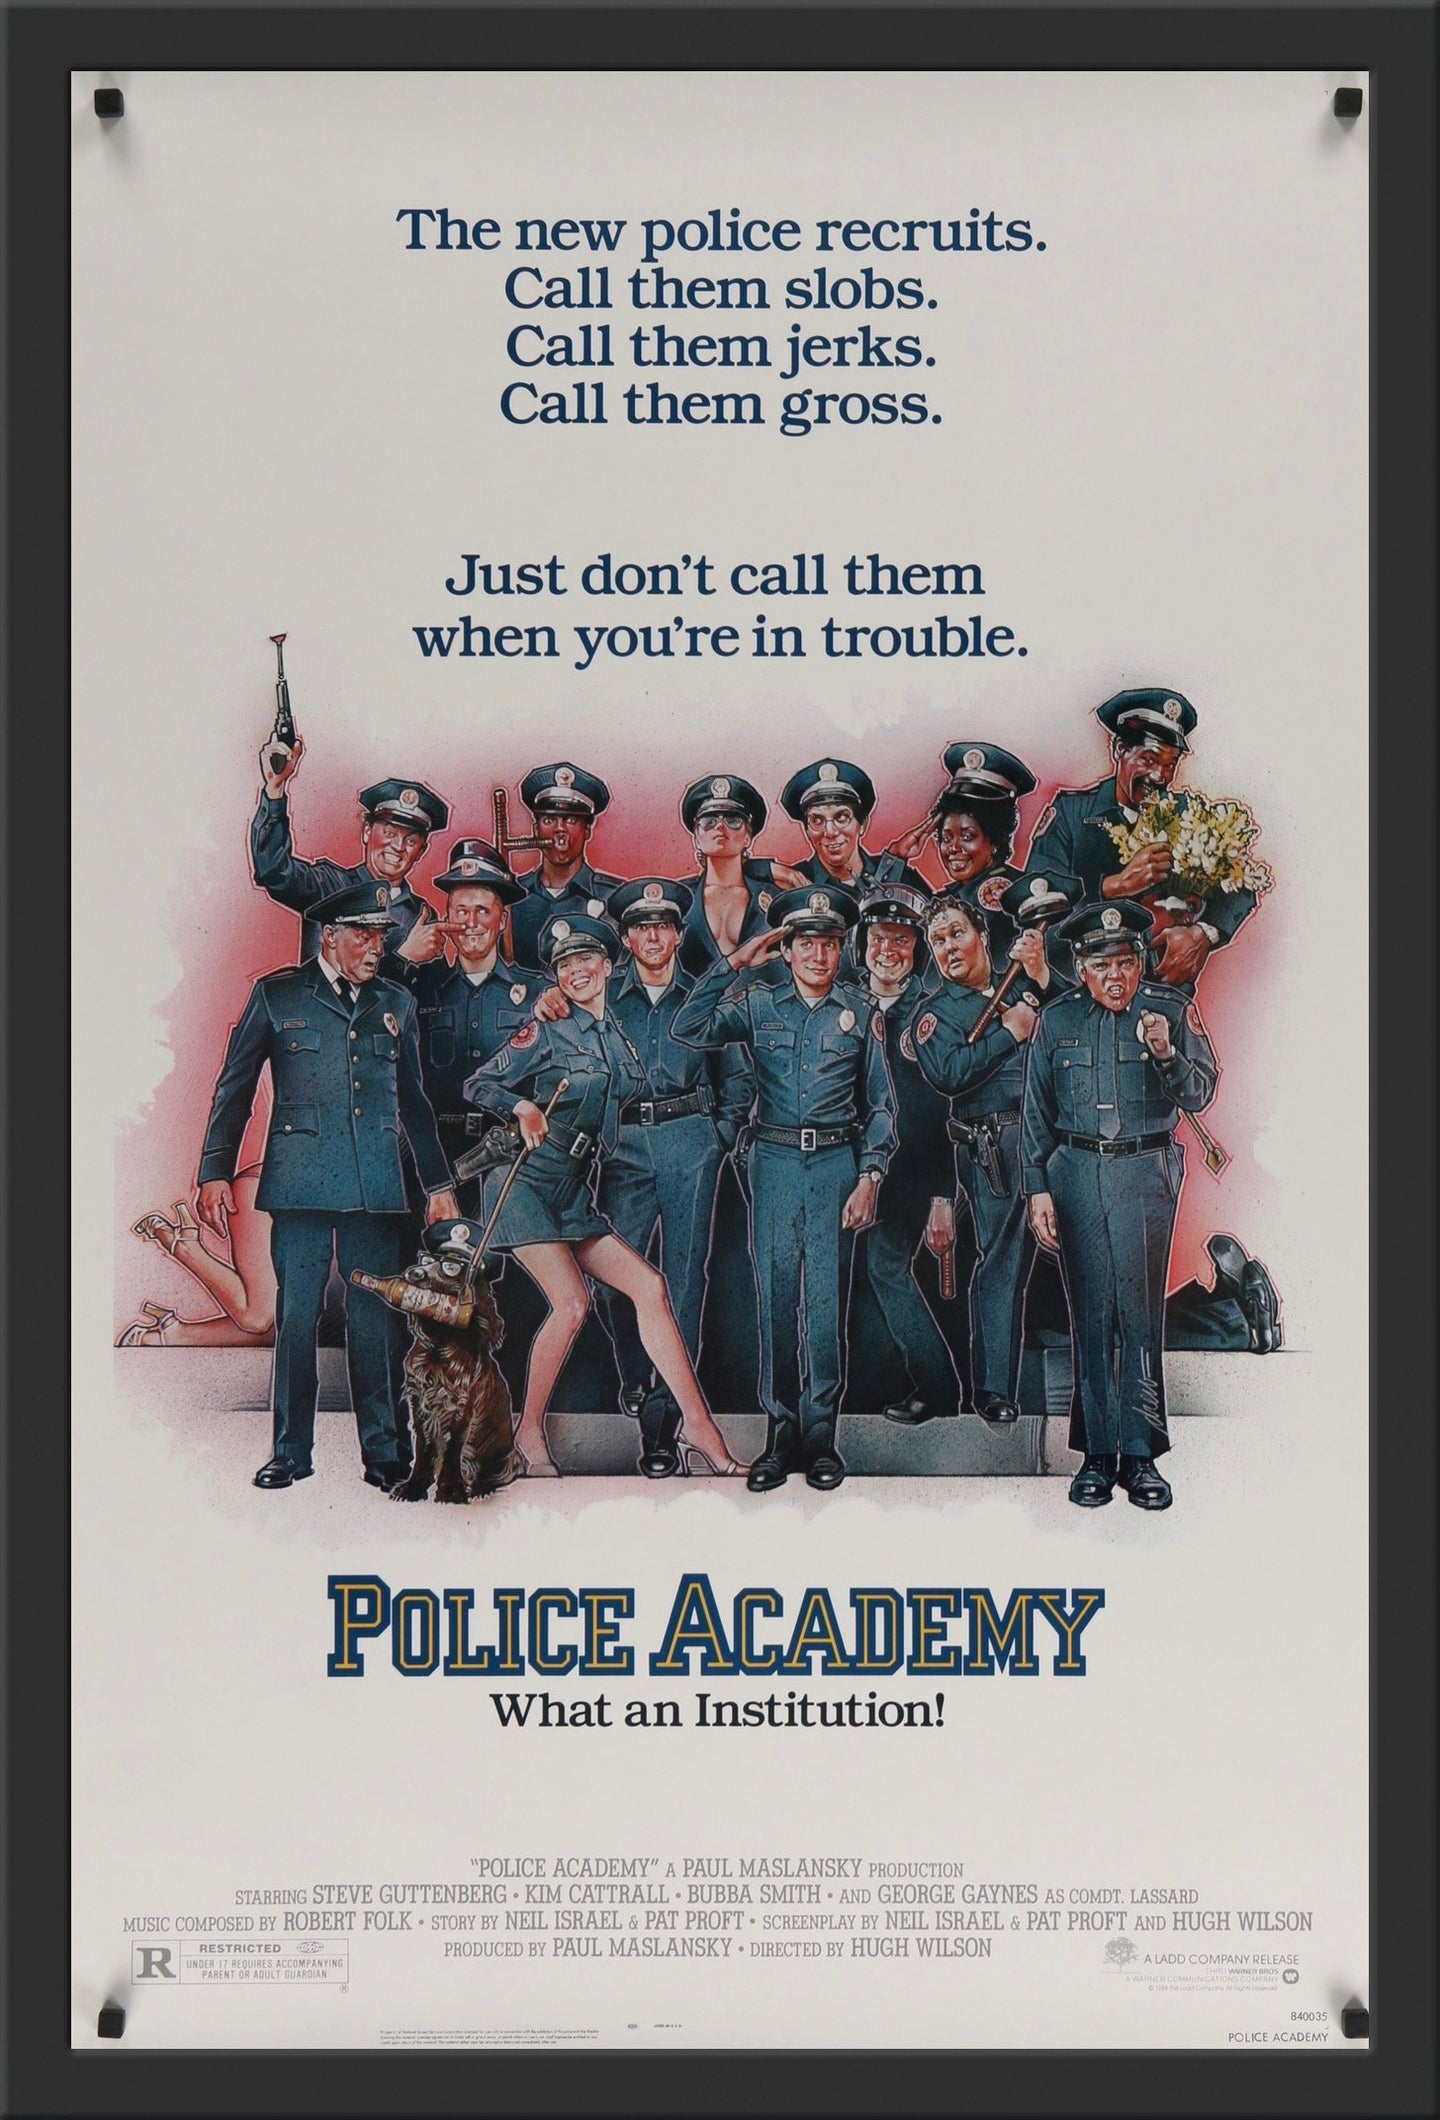 An original movie poster with artwork by Drew Struzan for the film Police Academy